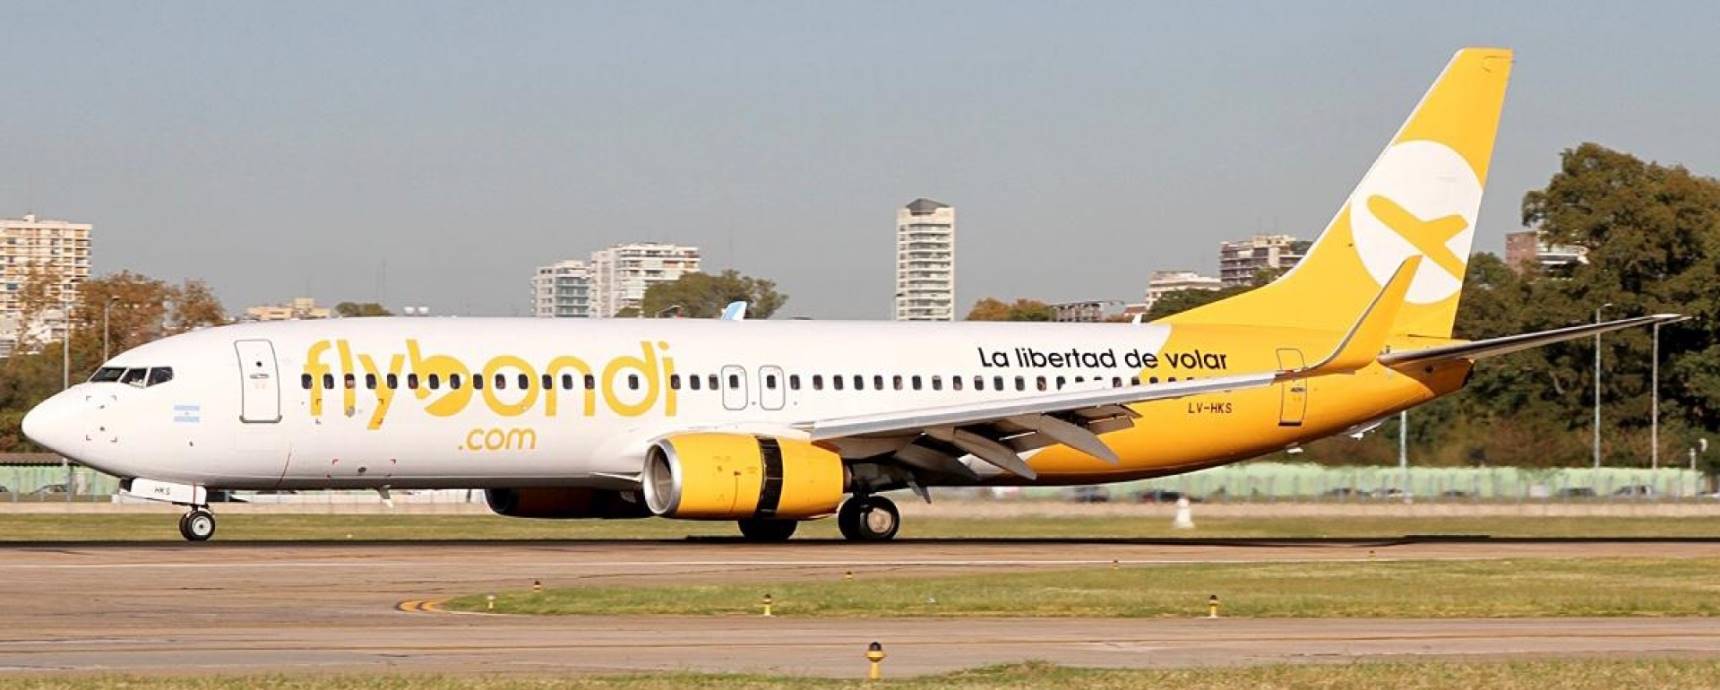 Low Cost Flybondi fará rota Florianópolis - Buenos Aires a partir de dezembro de 2019